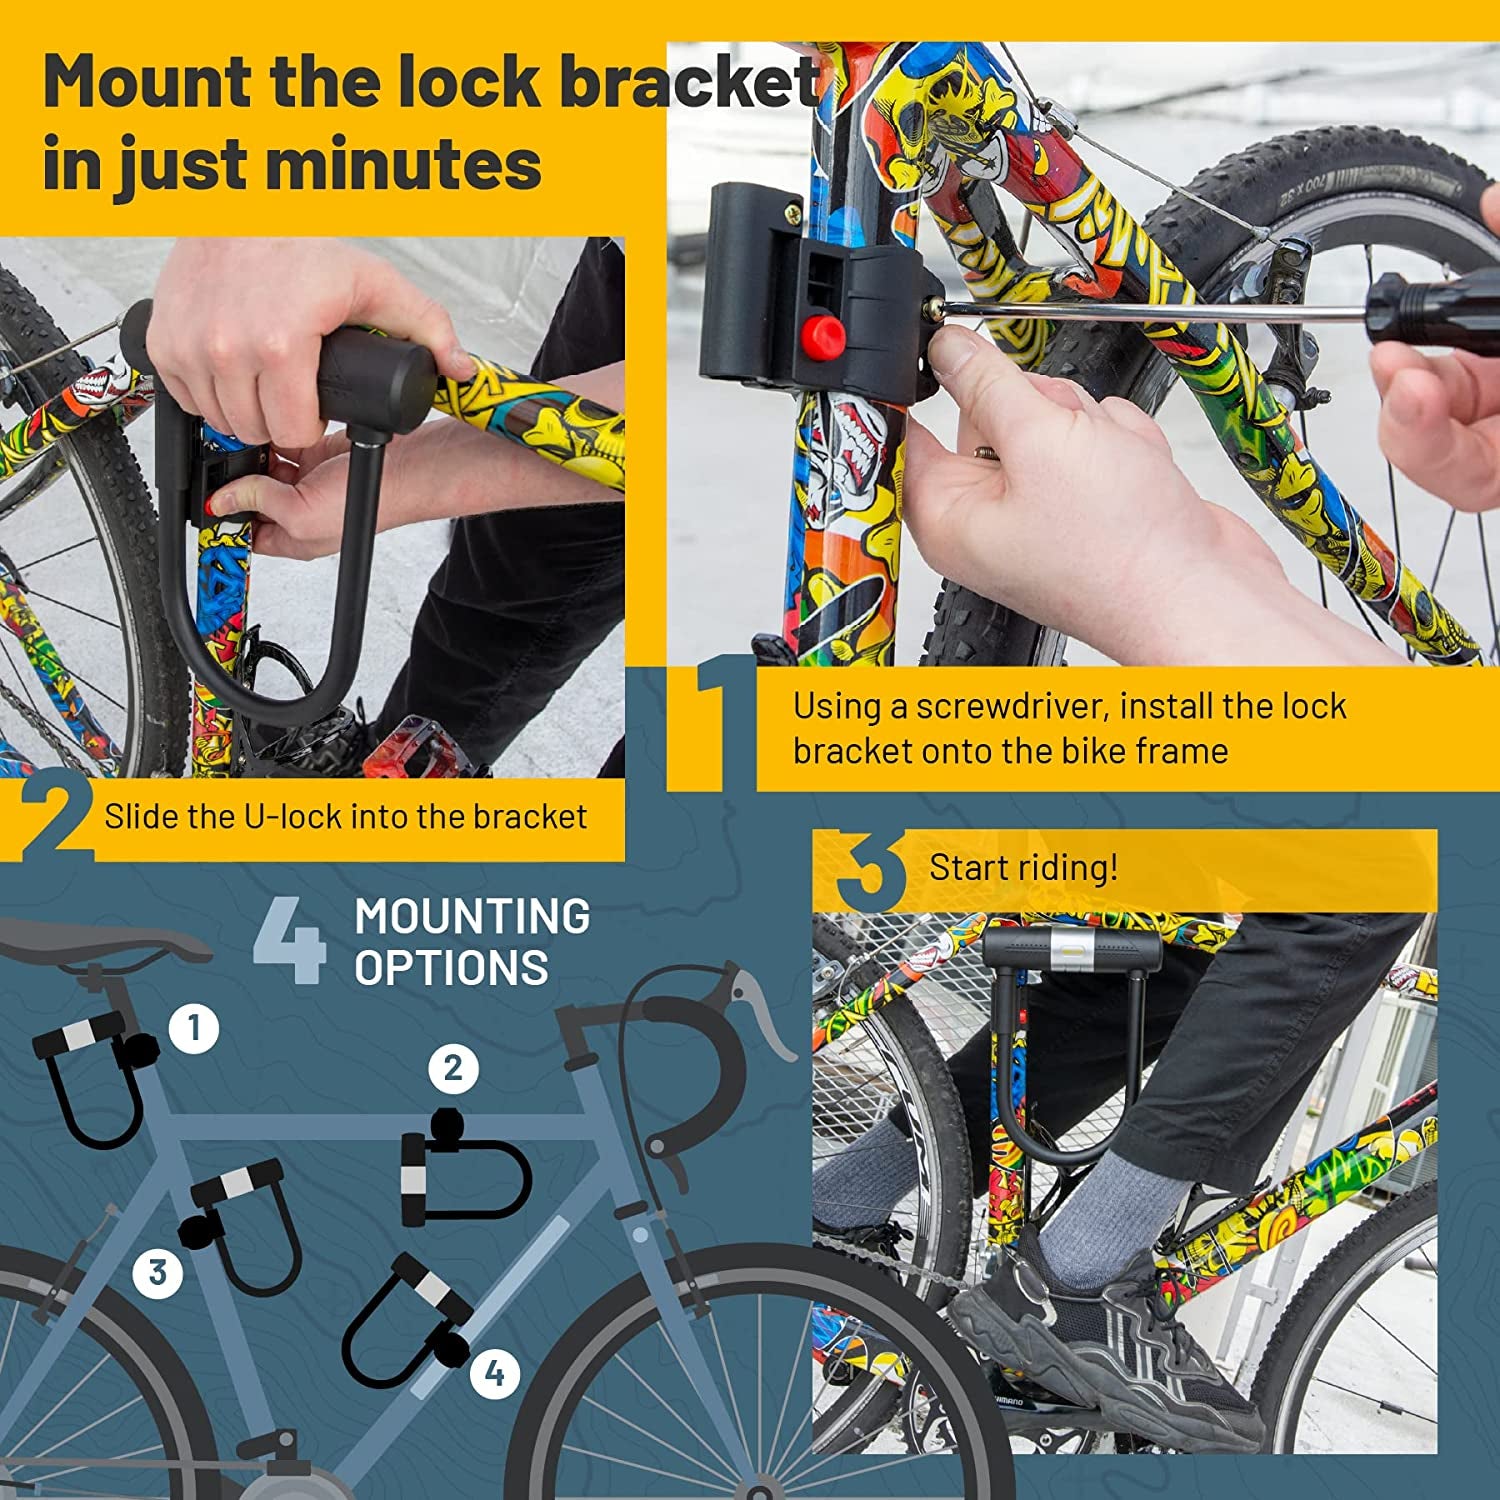 SIGTUNA Bike Lock with Bicycle Lock Mount Holder, High Security Bike Locks,  16mm Heavy Duty U-Lock Shackle and 1200mm Steel Chain Cable Bike Locks Plus  3 Keys 